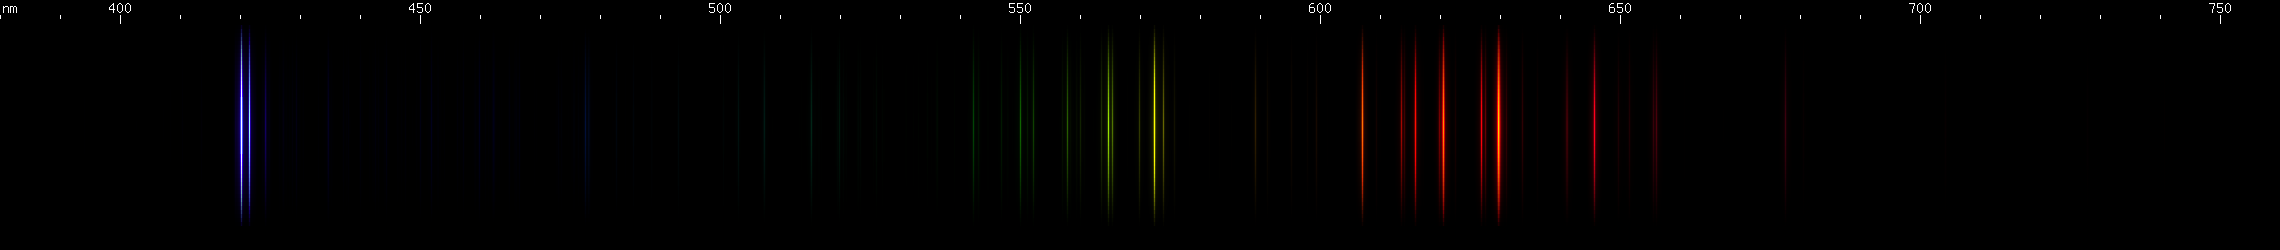 Spectral lines of Rubidium.